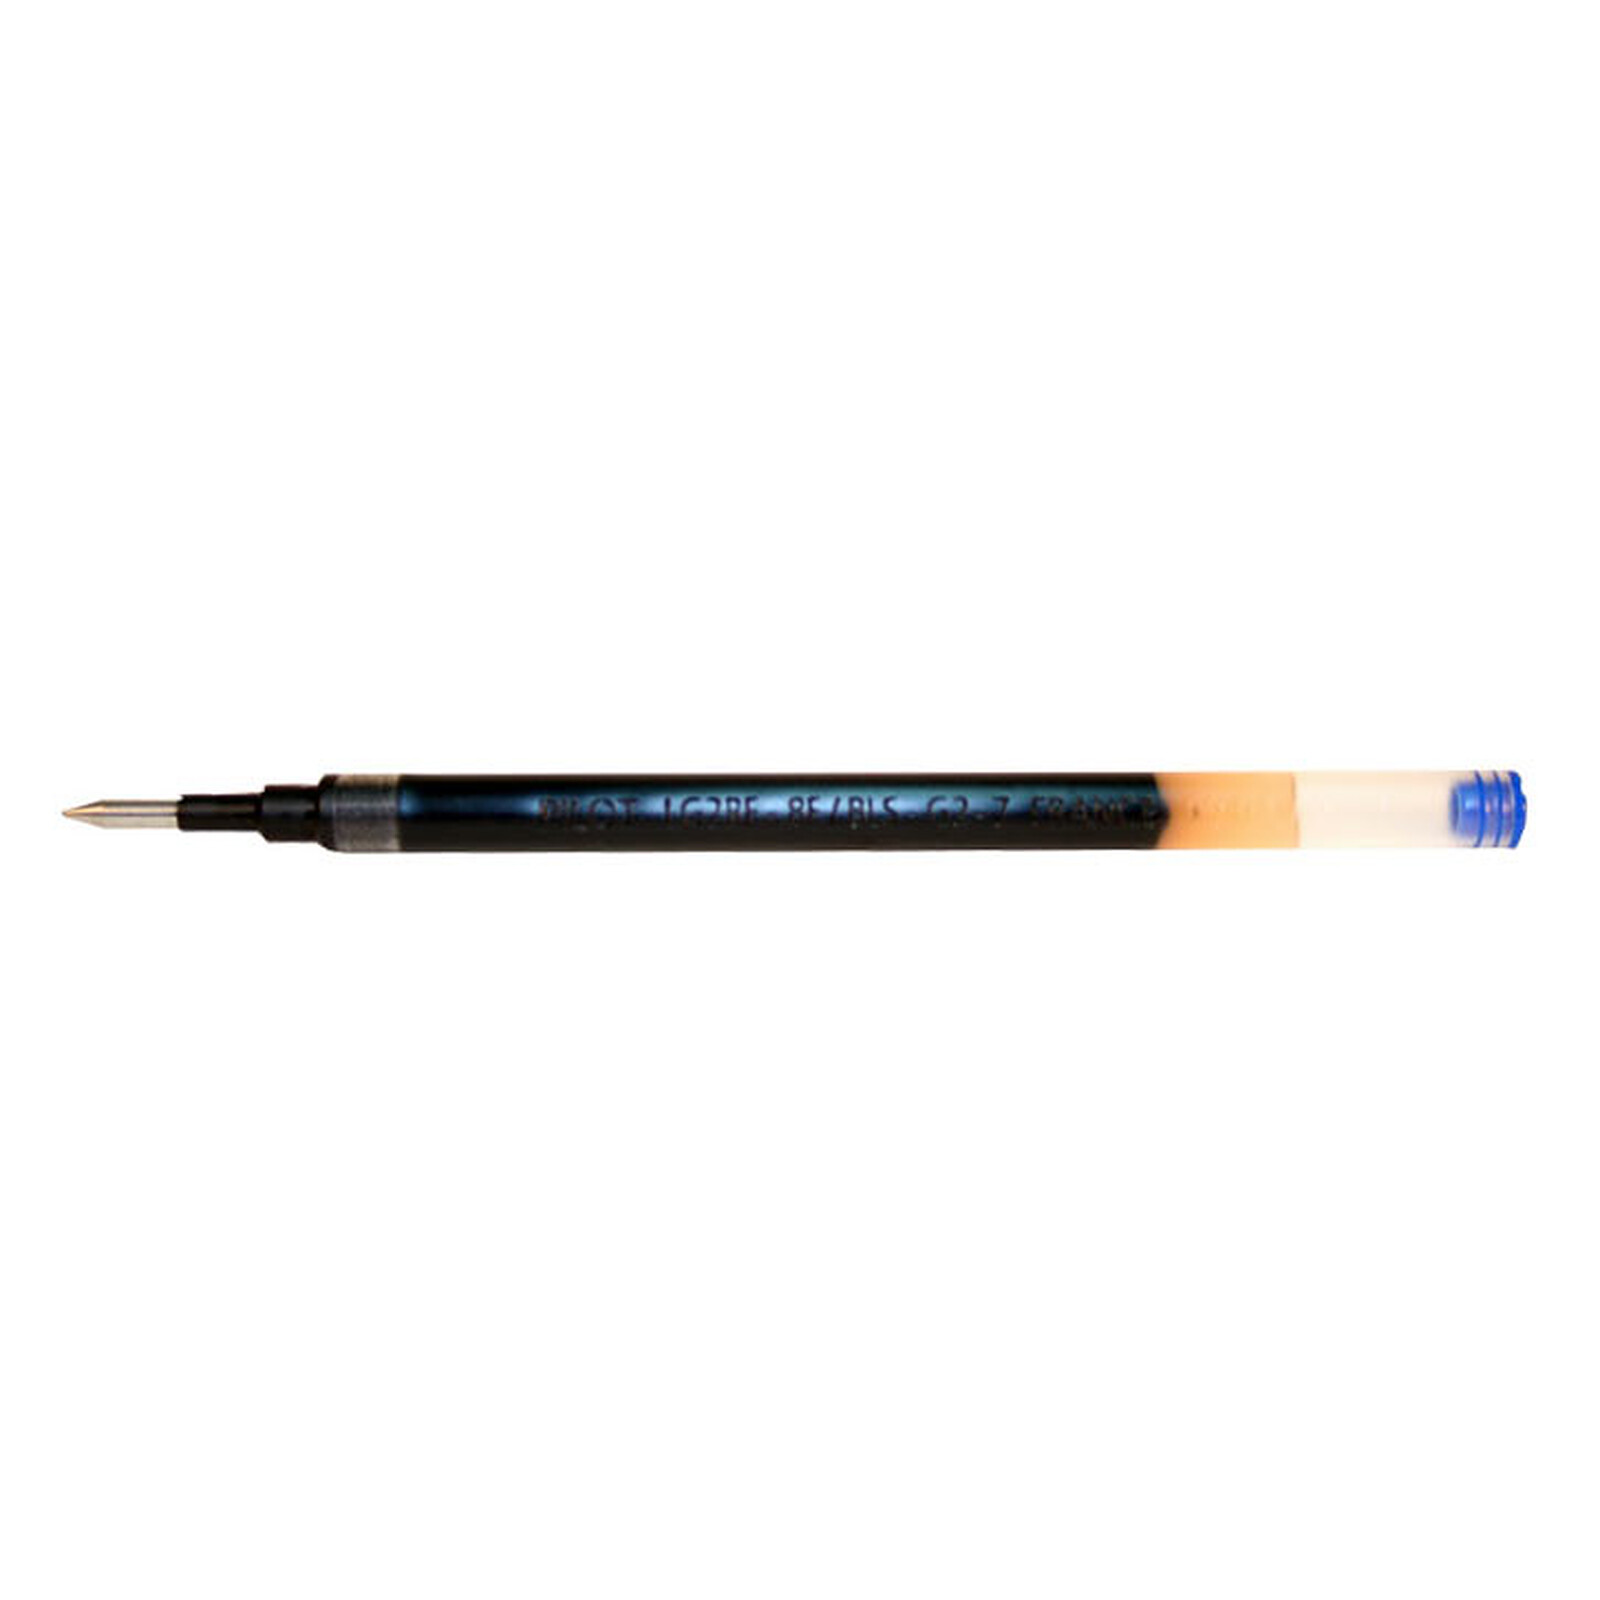 Recharge pour stylo Roller Pilot FriXion ball 0,7mm - Bleu